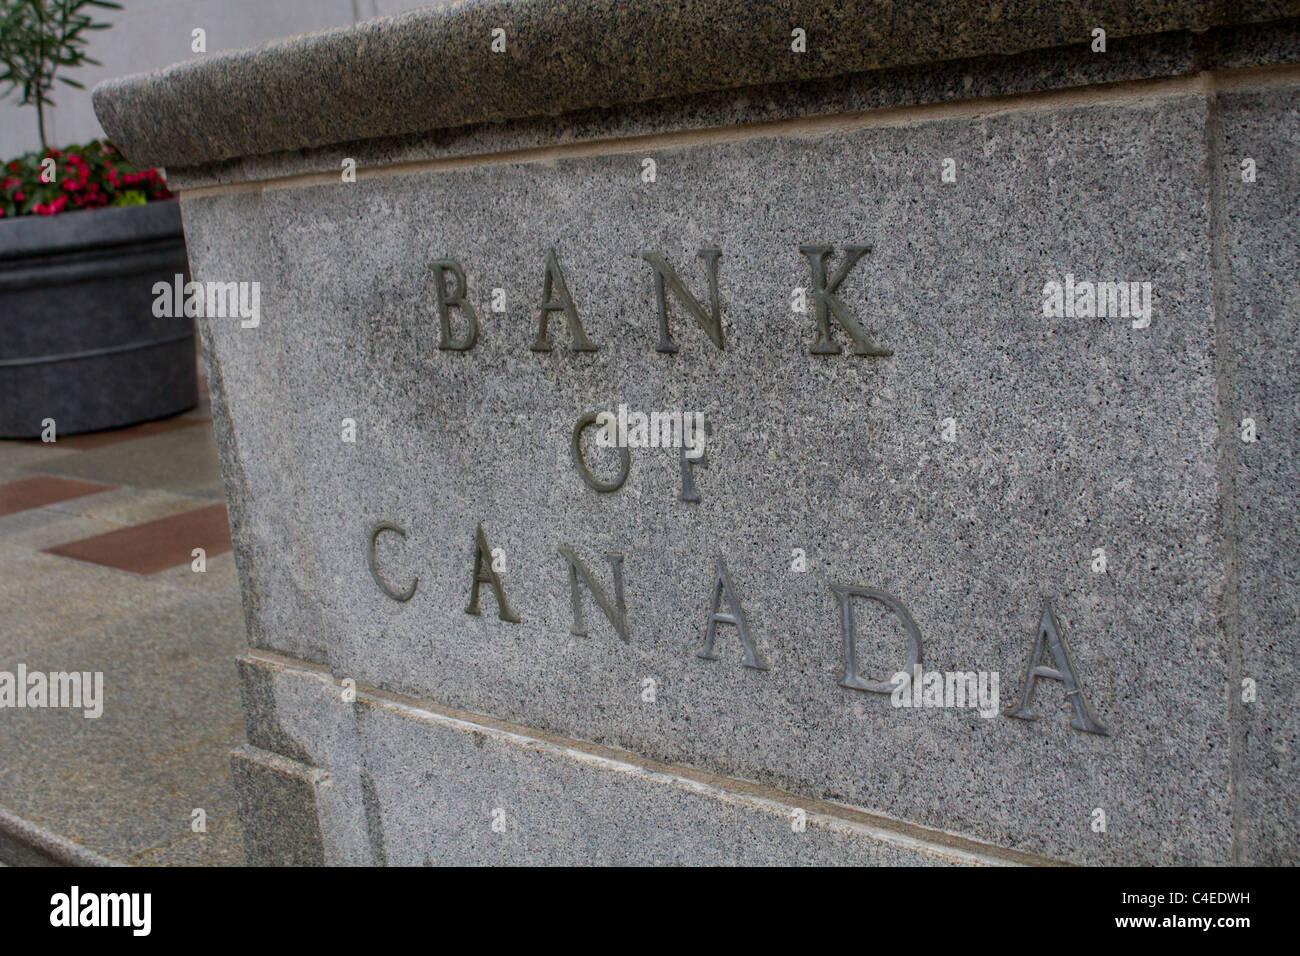 'bank of canada' logo sign Stock Photo